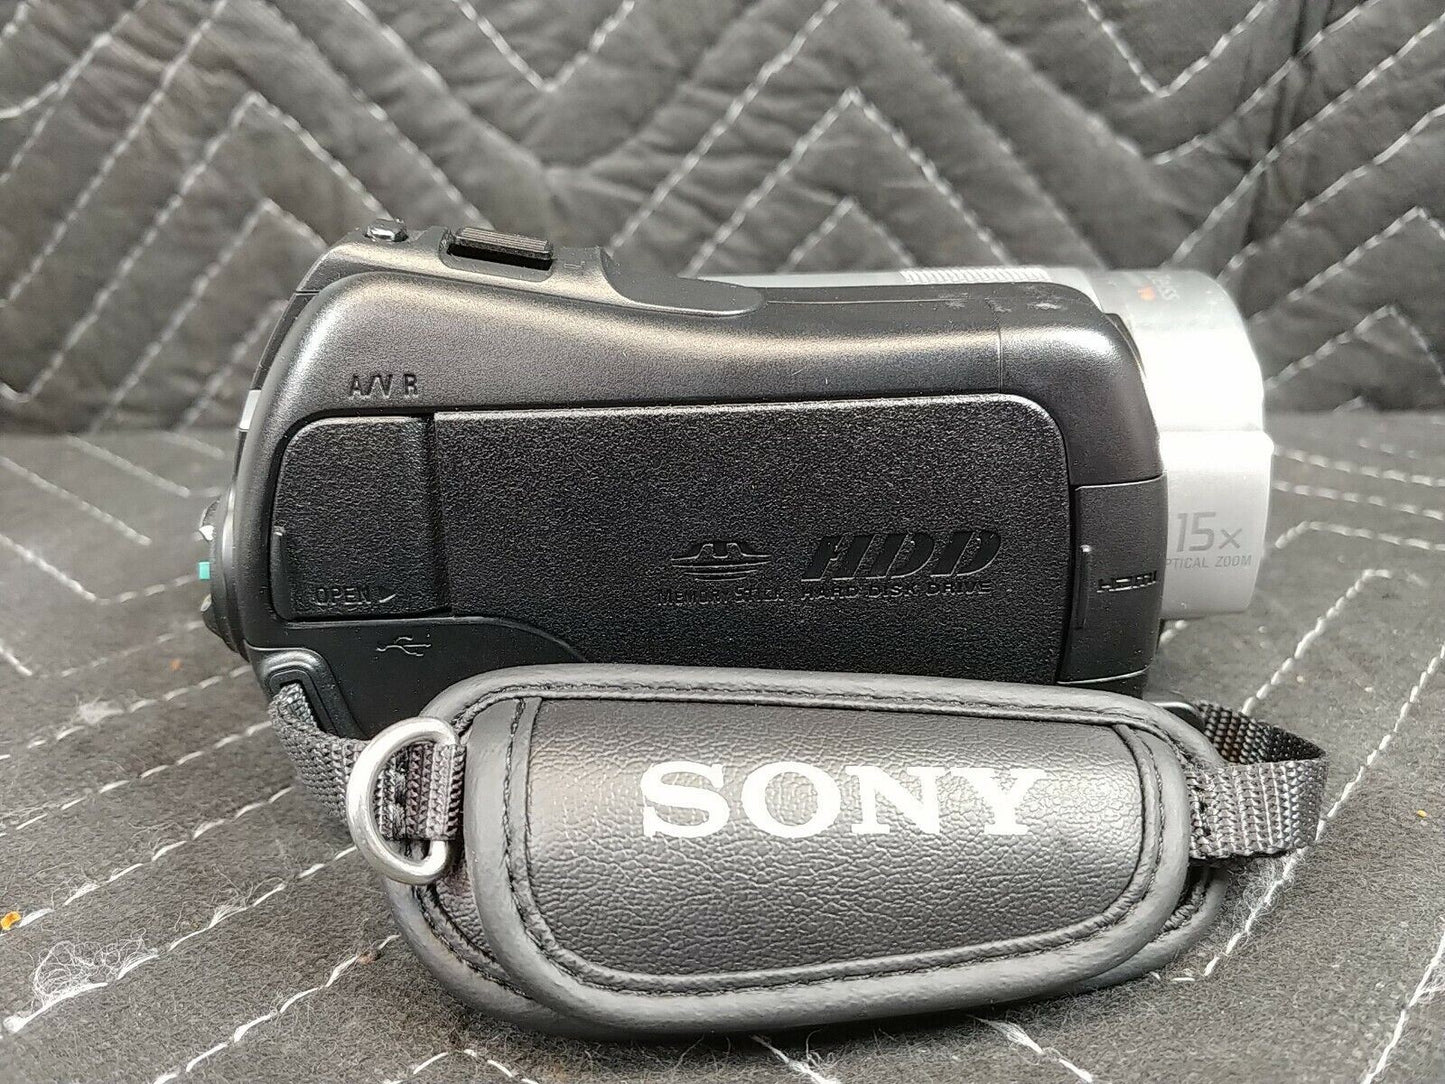 Sony HDR-SR10 Handycam Digital HD Video Camera Recorder